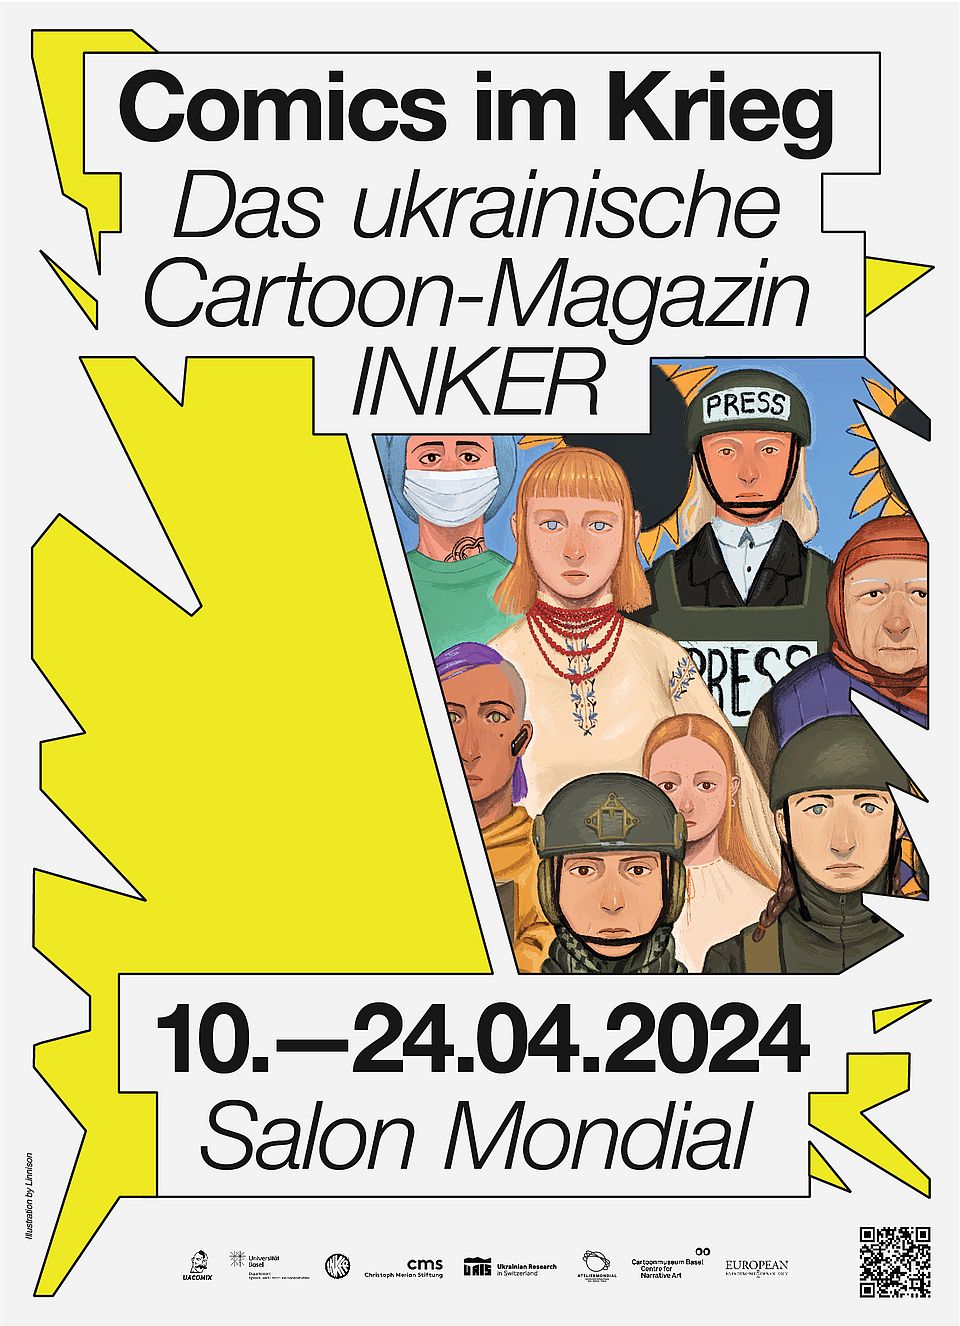 comics_im_krieg_poster_digital.jpg